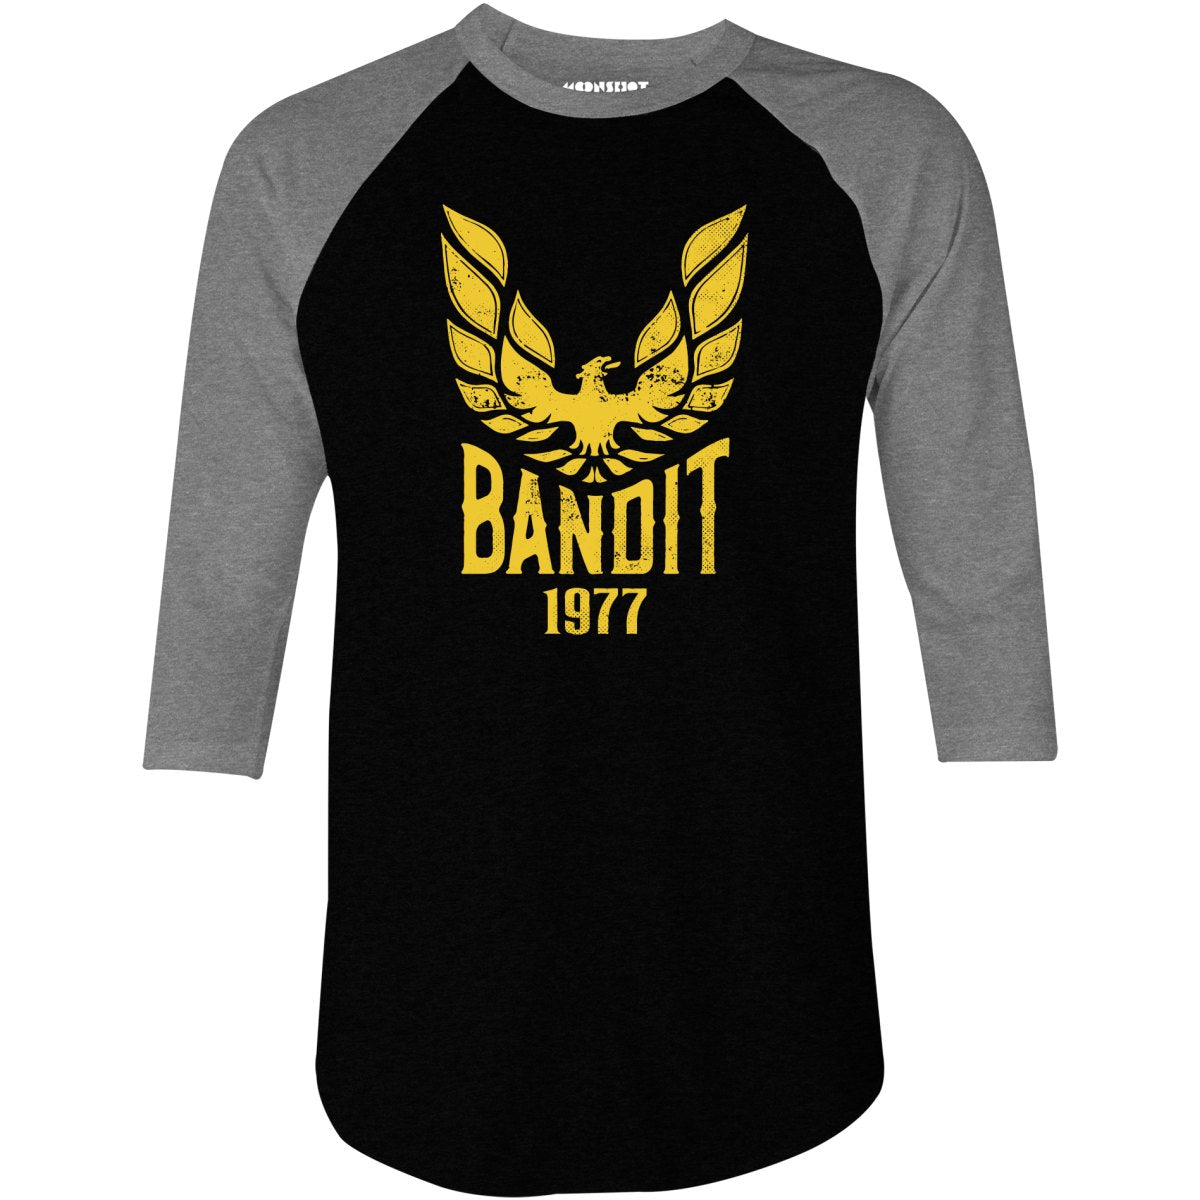 Bandit 1977 - 3/4 Sleeve Raglan T-Shirt